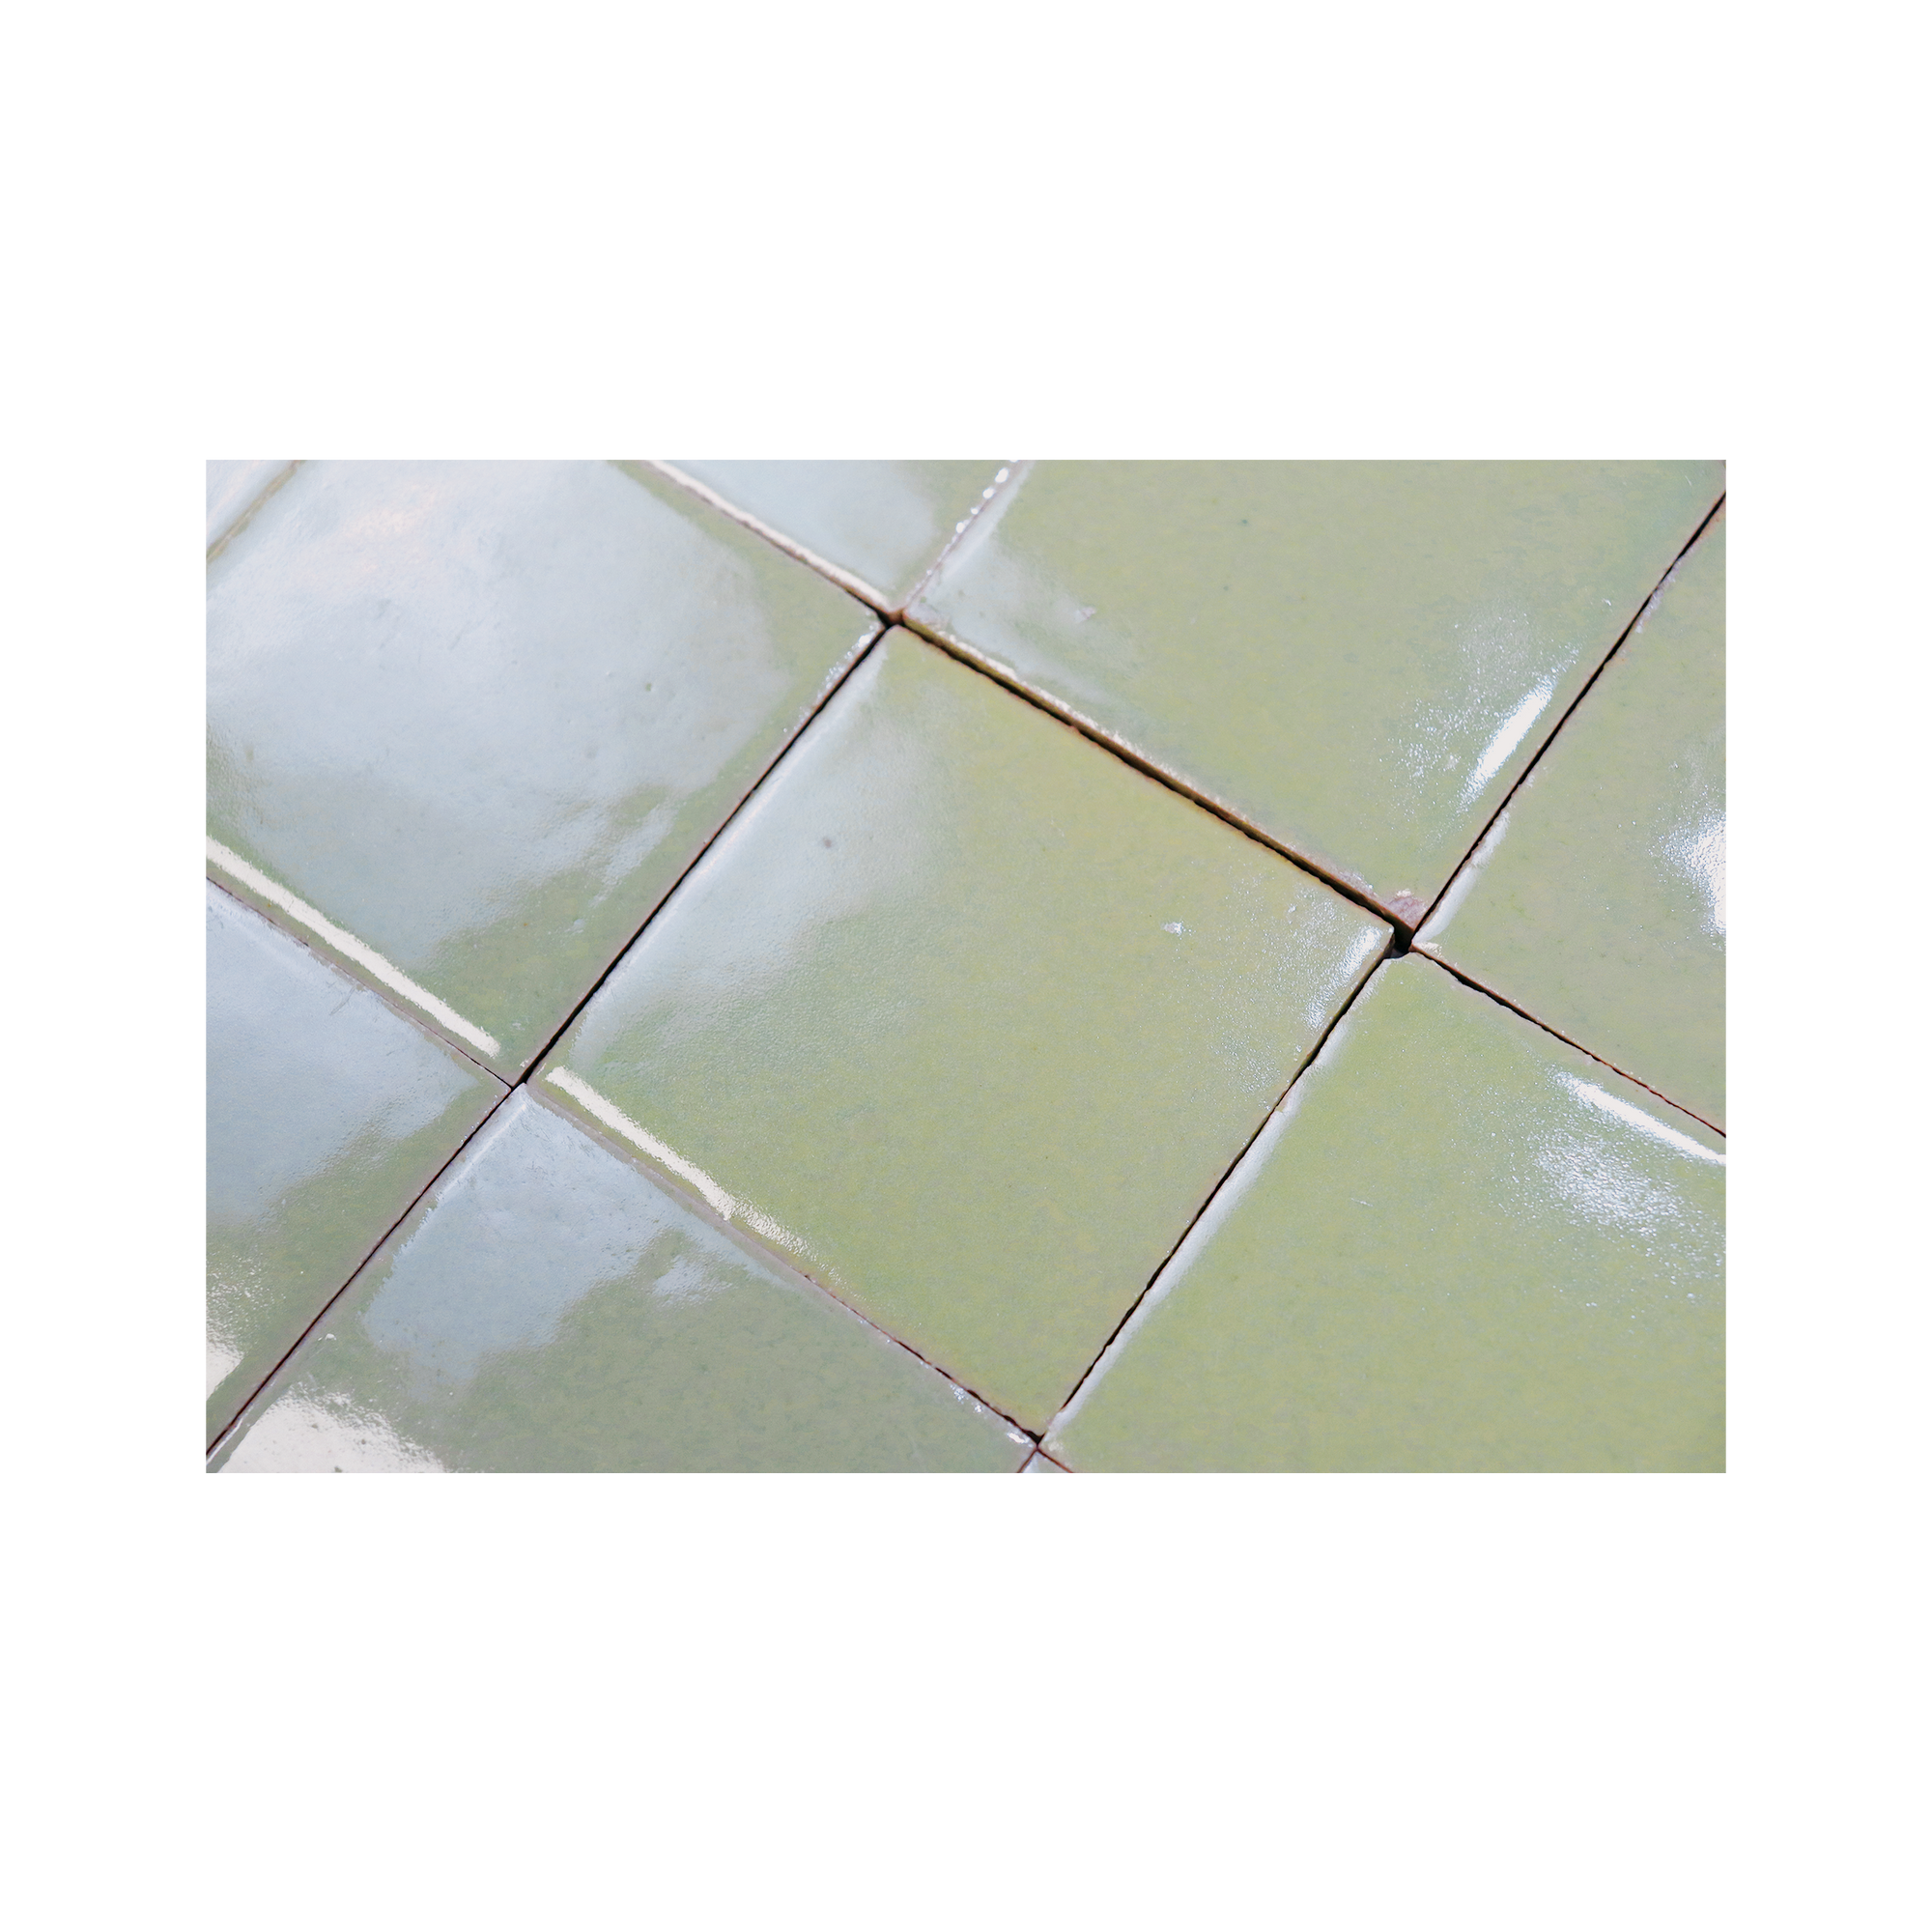 Stoneware 3.5x3.5 Seafoam Green Glossy Tile